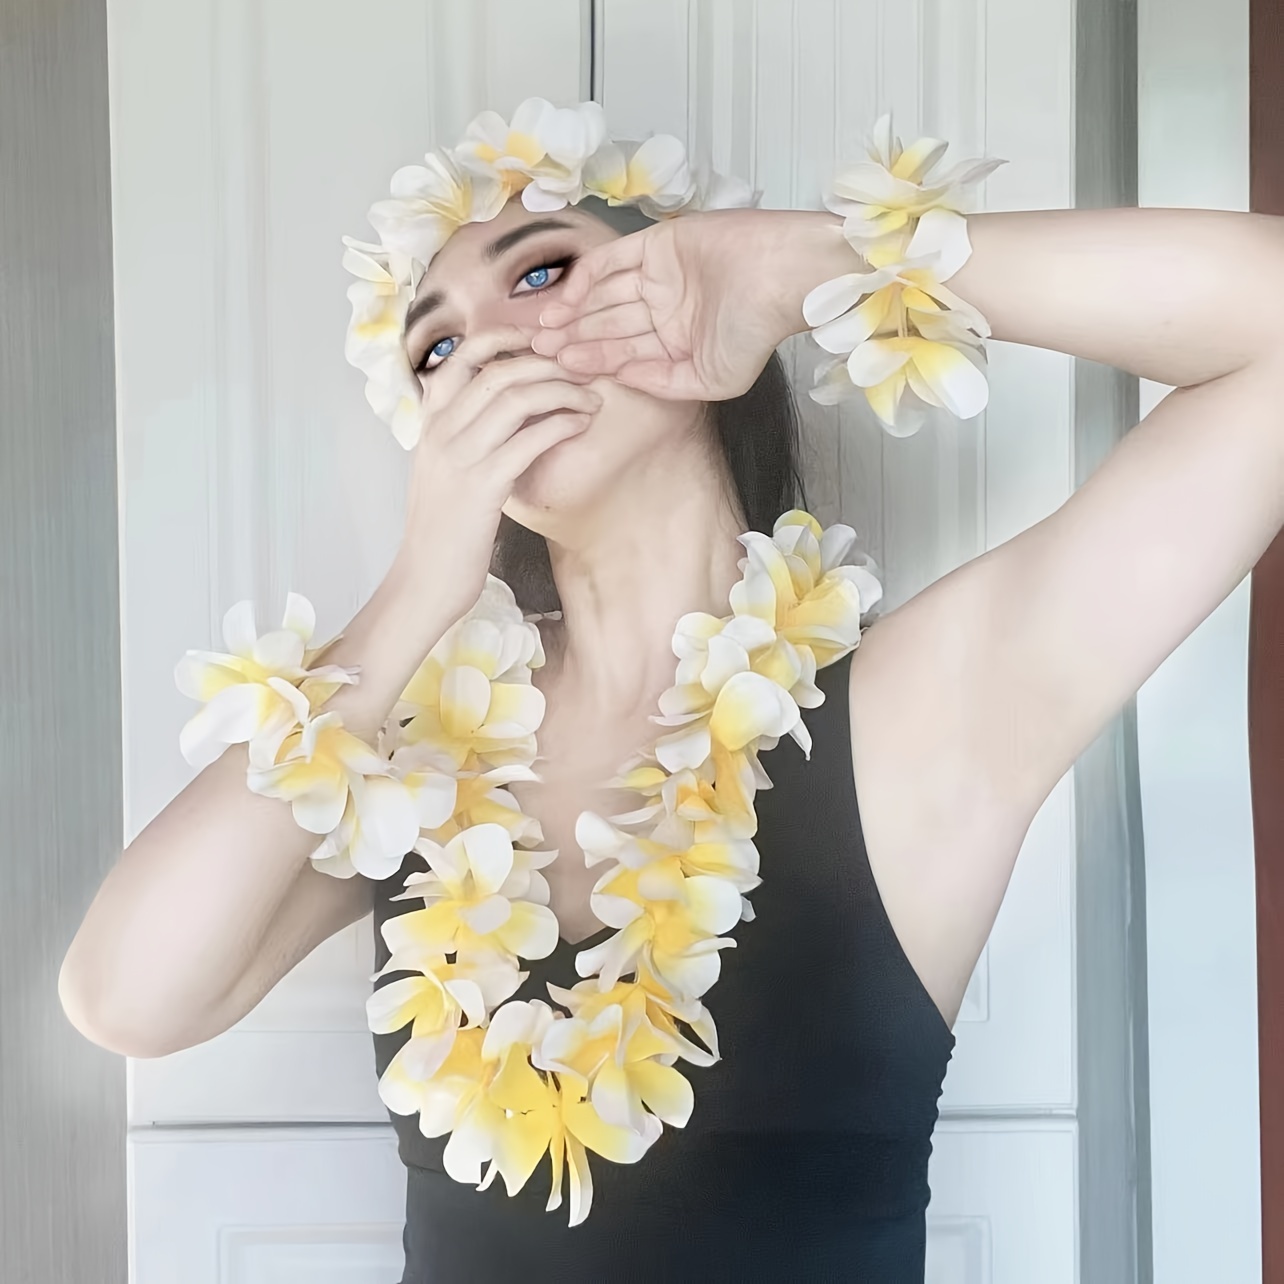 

Hawaiian Luau Flower Garland Set – Handcrafted Plumeria Lei Necklace, Headband, Wristbands For Graduation, Juneteenth, Summer Performances & Beach Party Decorations – Polyester, Yellow & Green Blooms